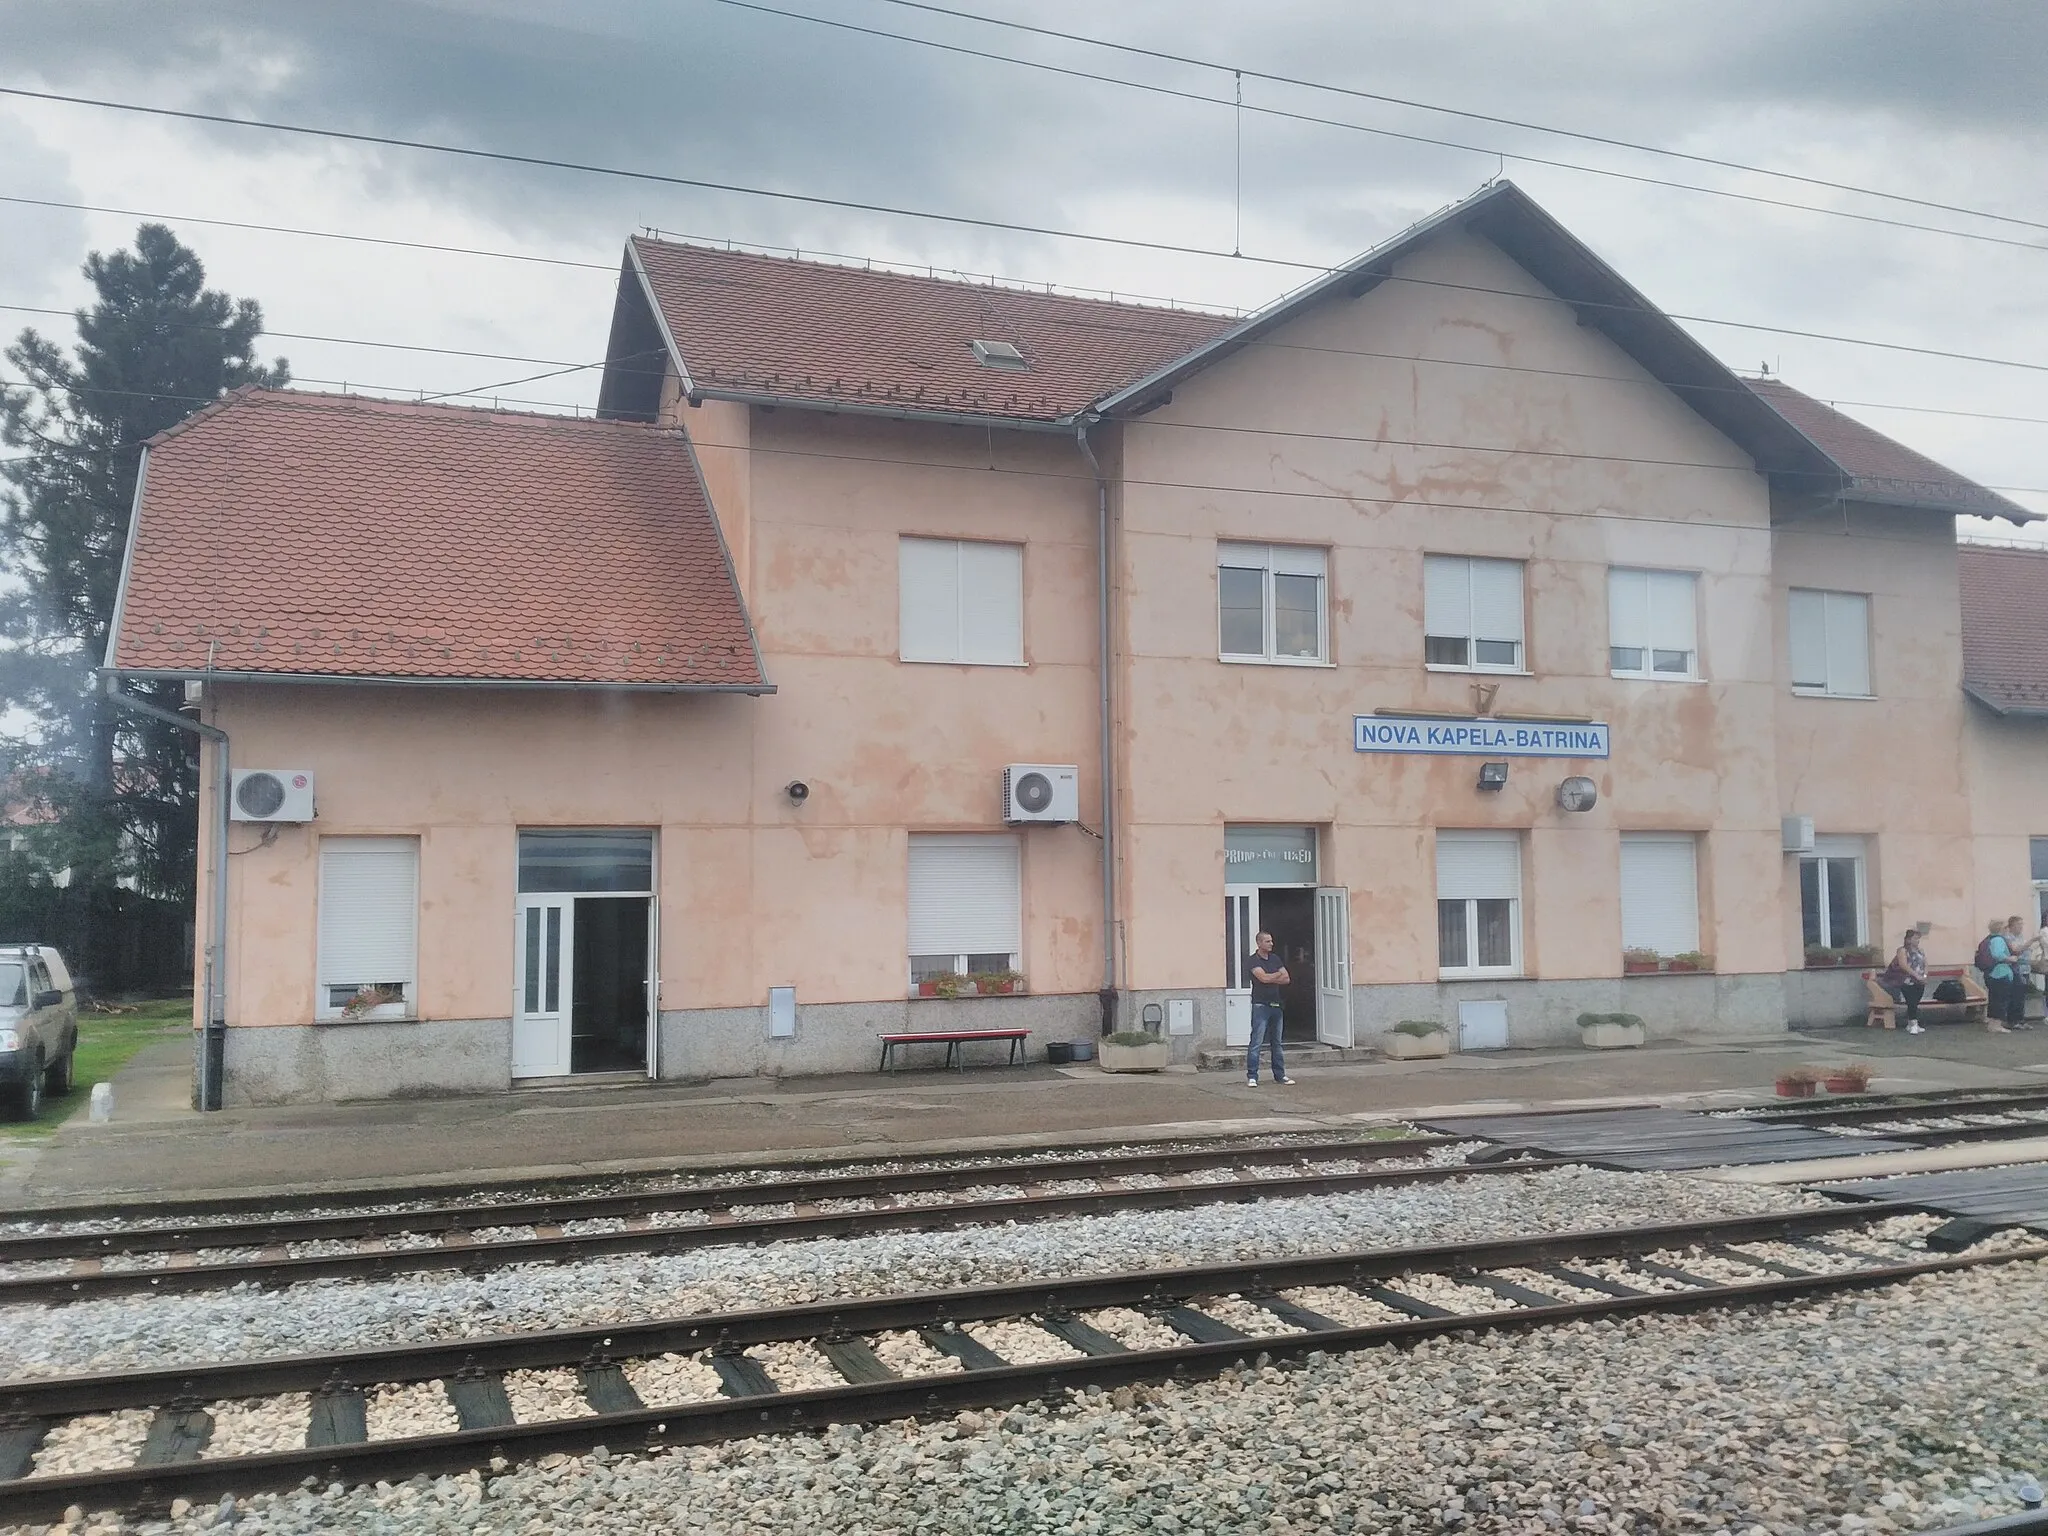 Photo showing: Nova Kapela–Batrina railway station